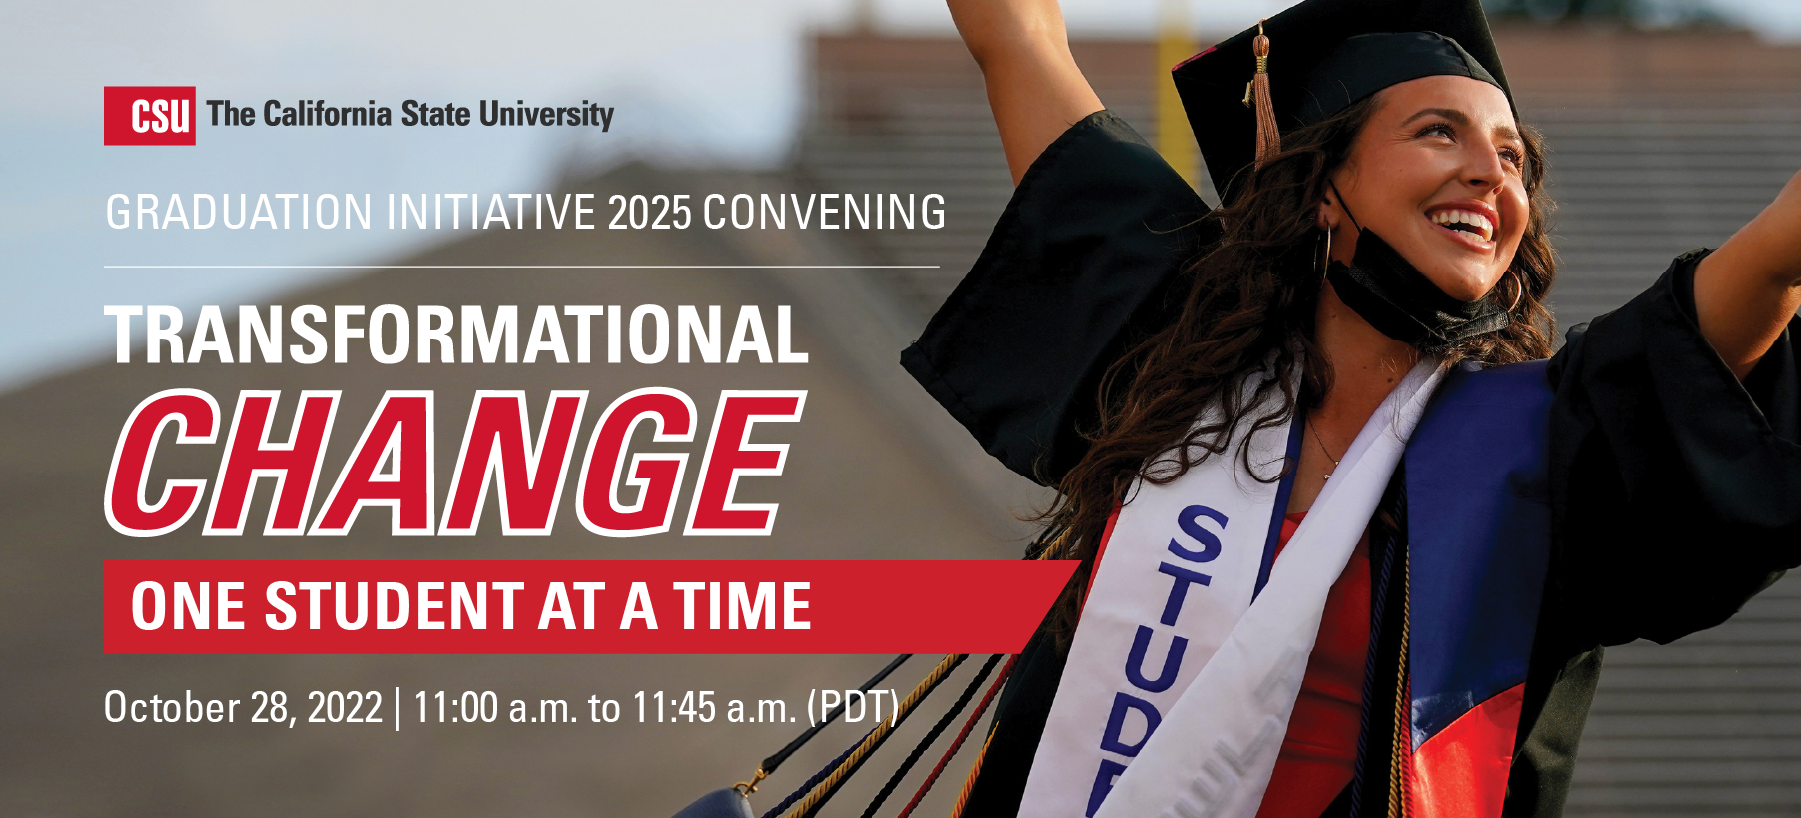 Graduation Initiative 2025 Convening CSU